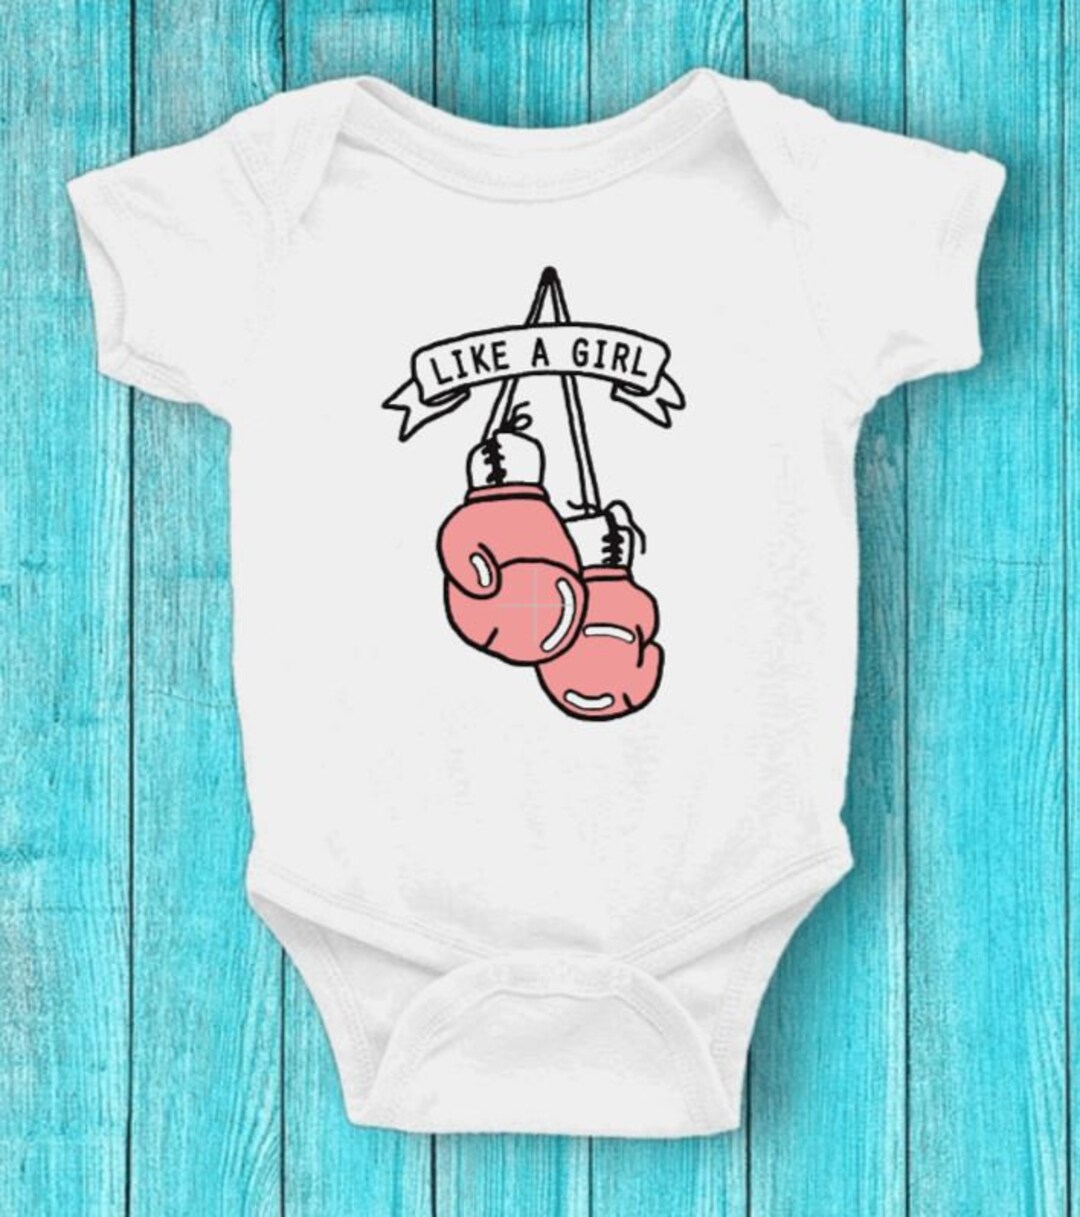 MMA Boxing Like a Girl Onesie bodysuit, Baby Shower Gift, Baby Birthday Gift, Baby Girl, Baby Boy, Unisex Kids Clothing